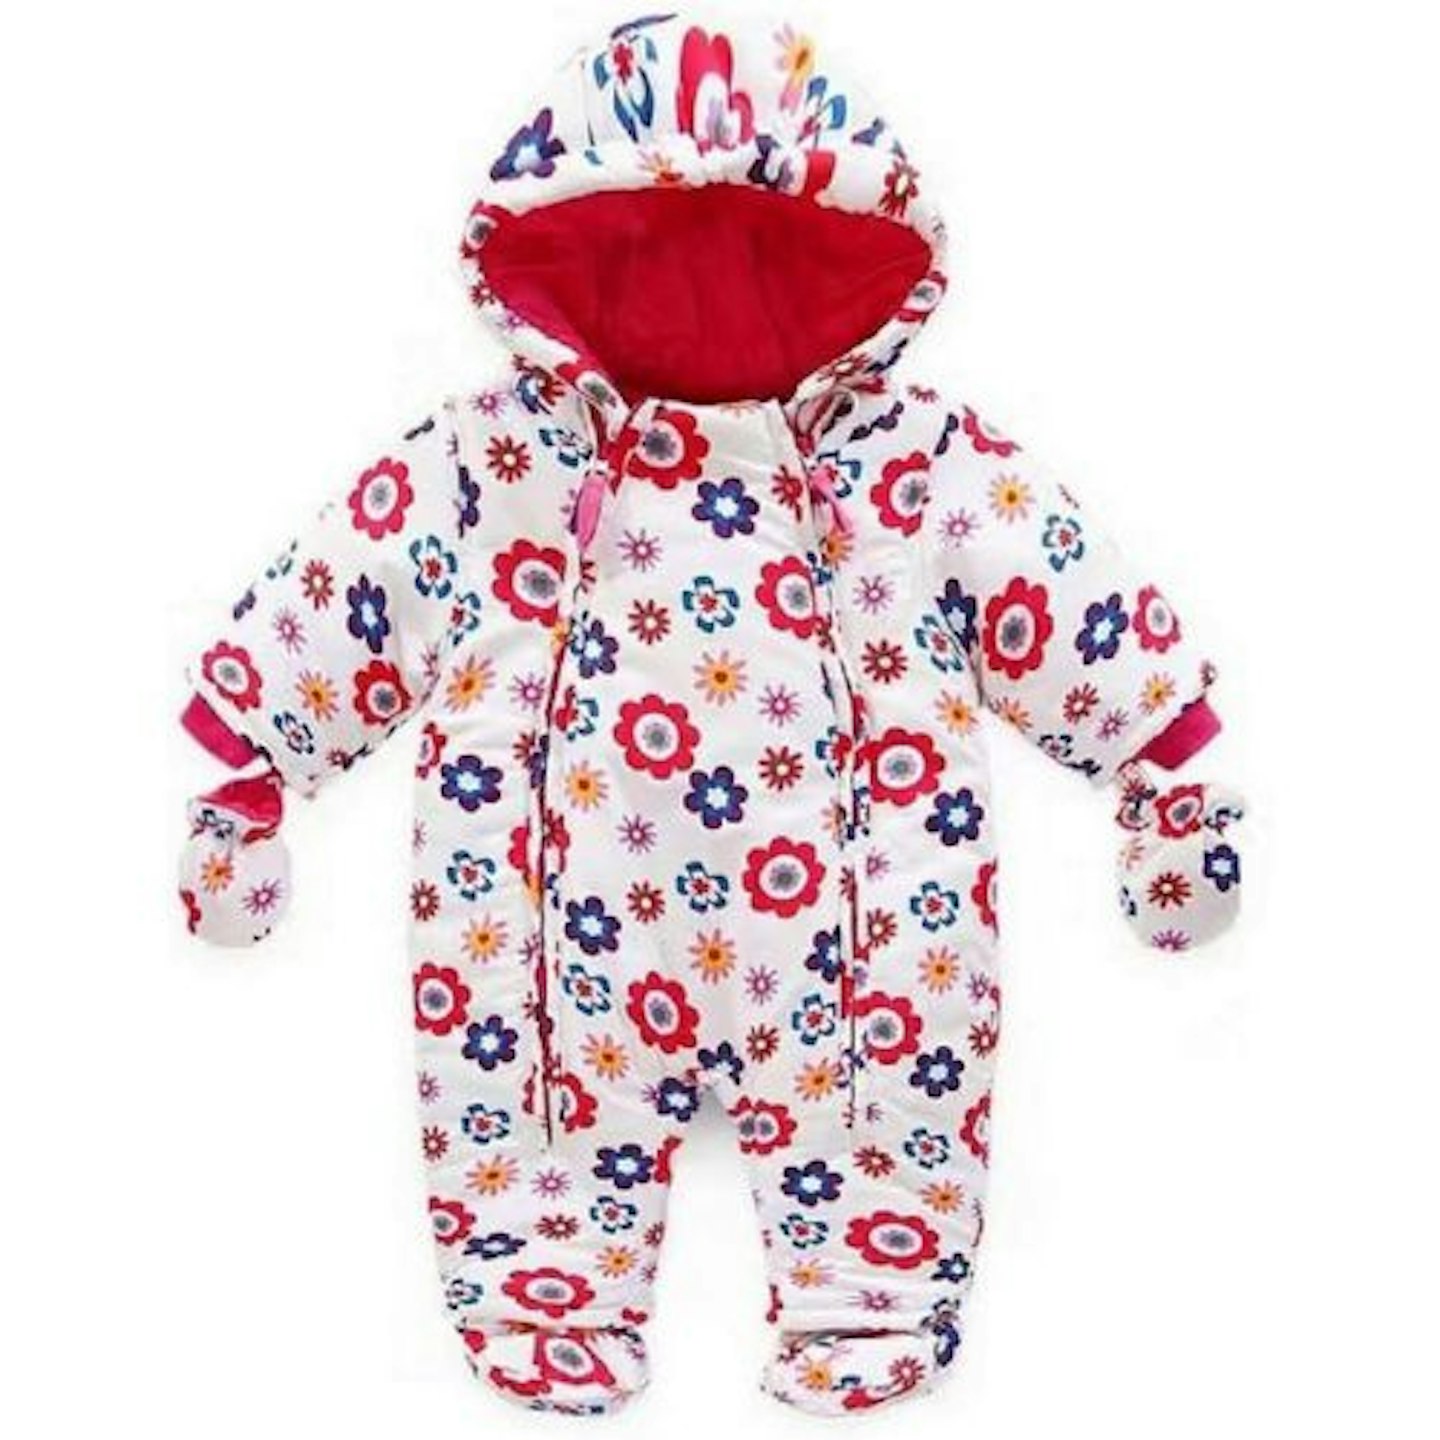 Baby Snowsuit Infant Hooded Romper